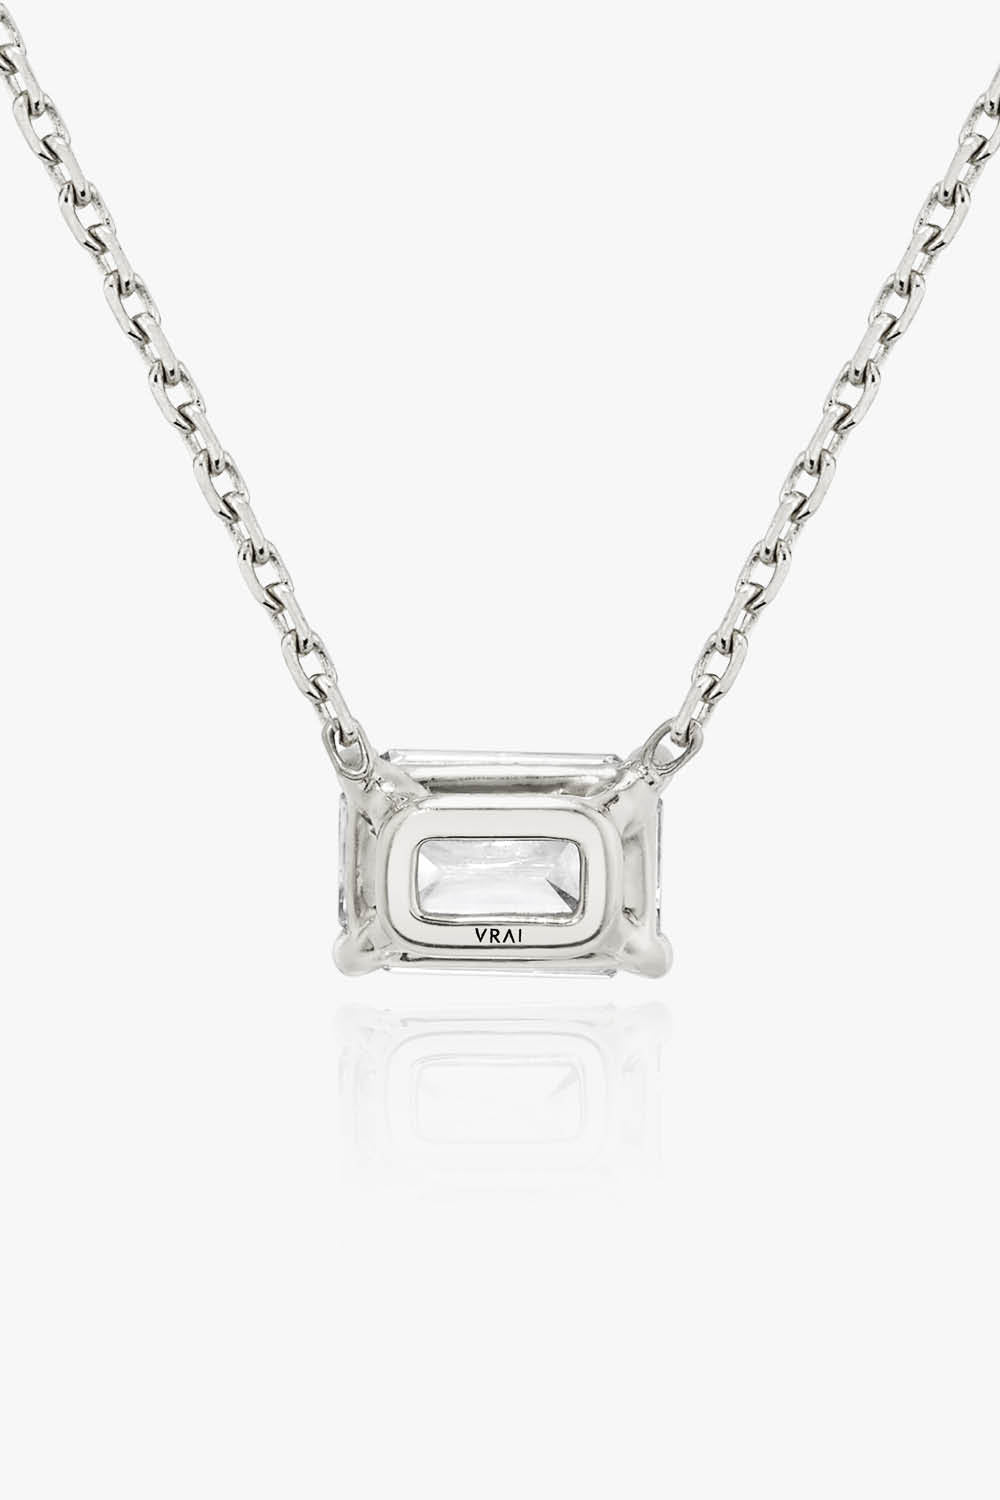 Classic Gigi Emerald necklace, White Gold, 16.5